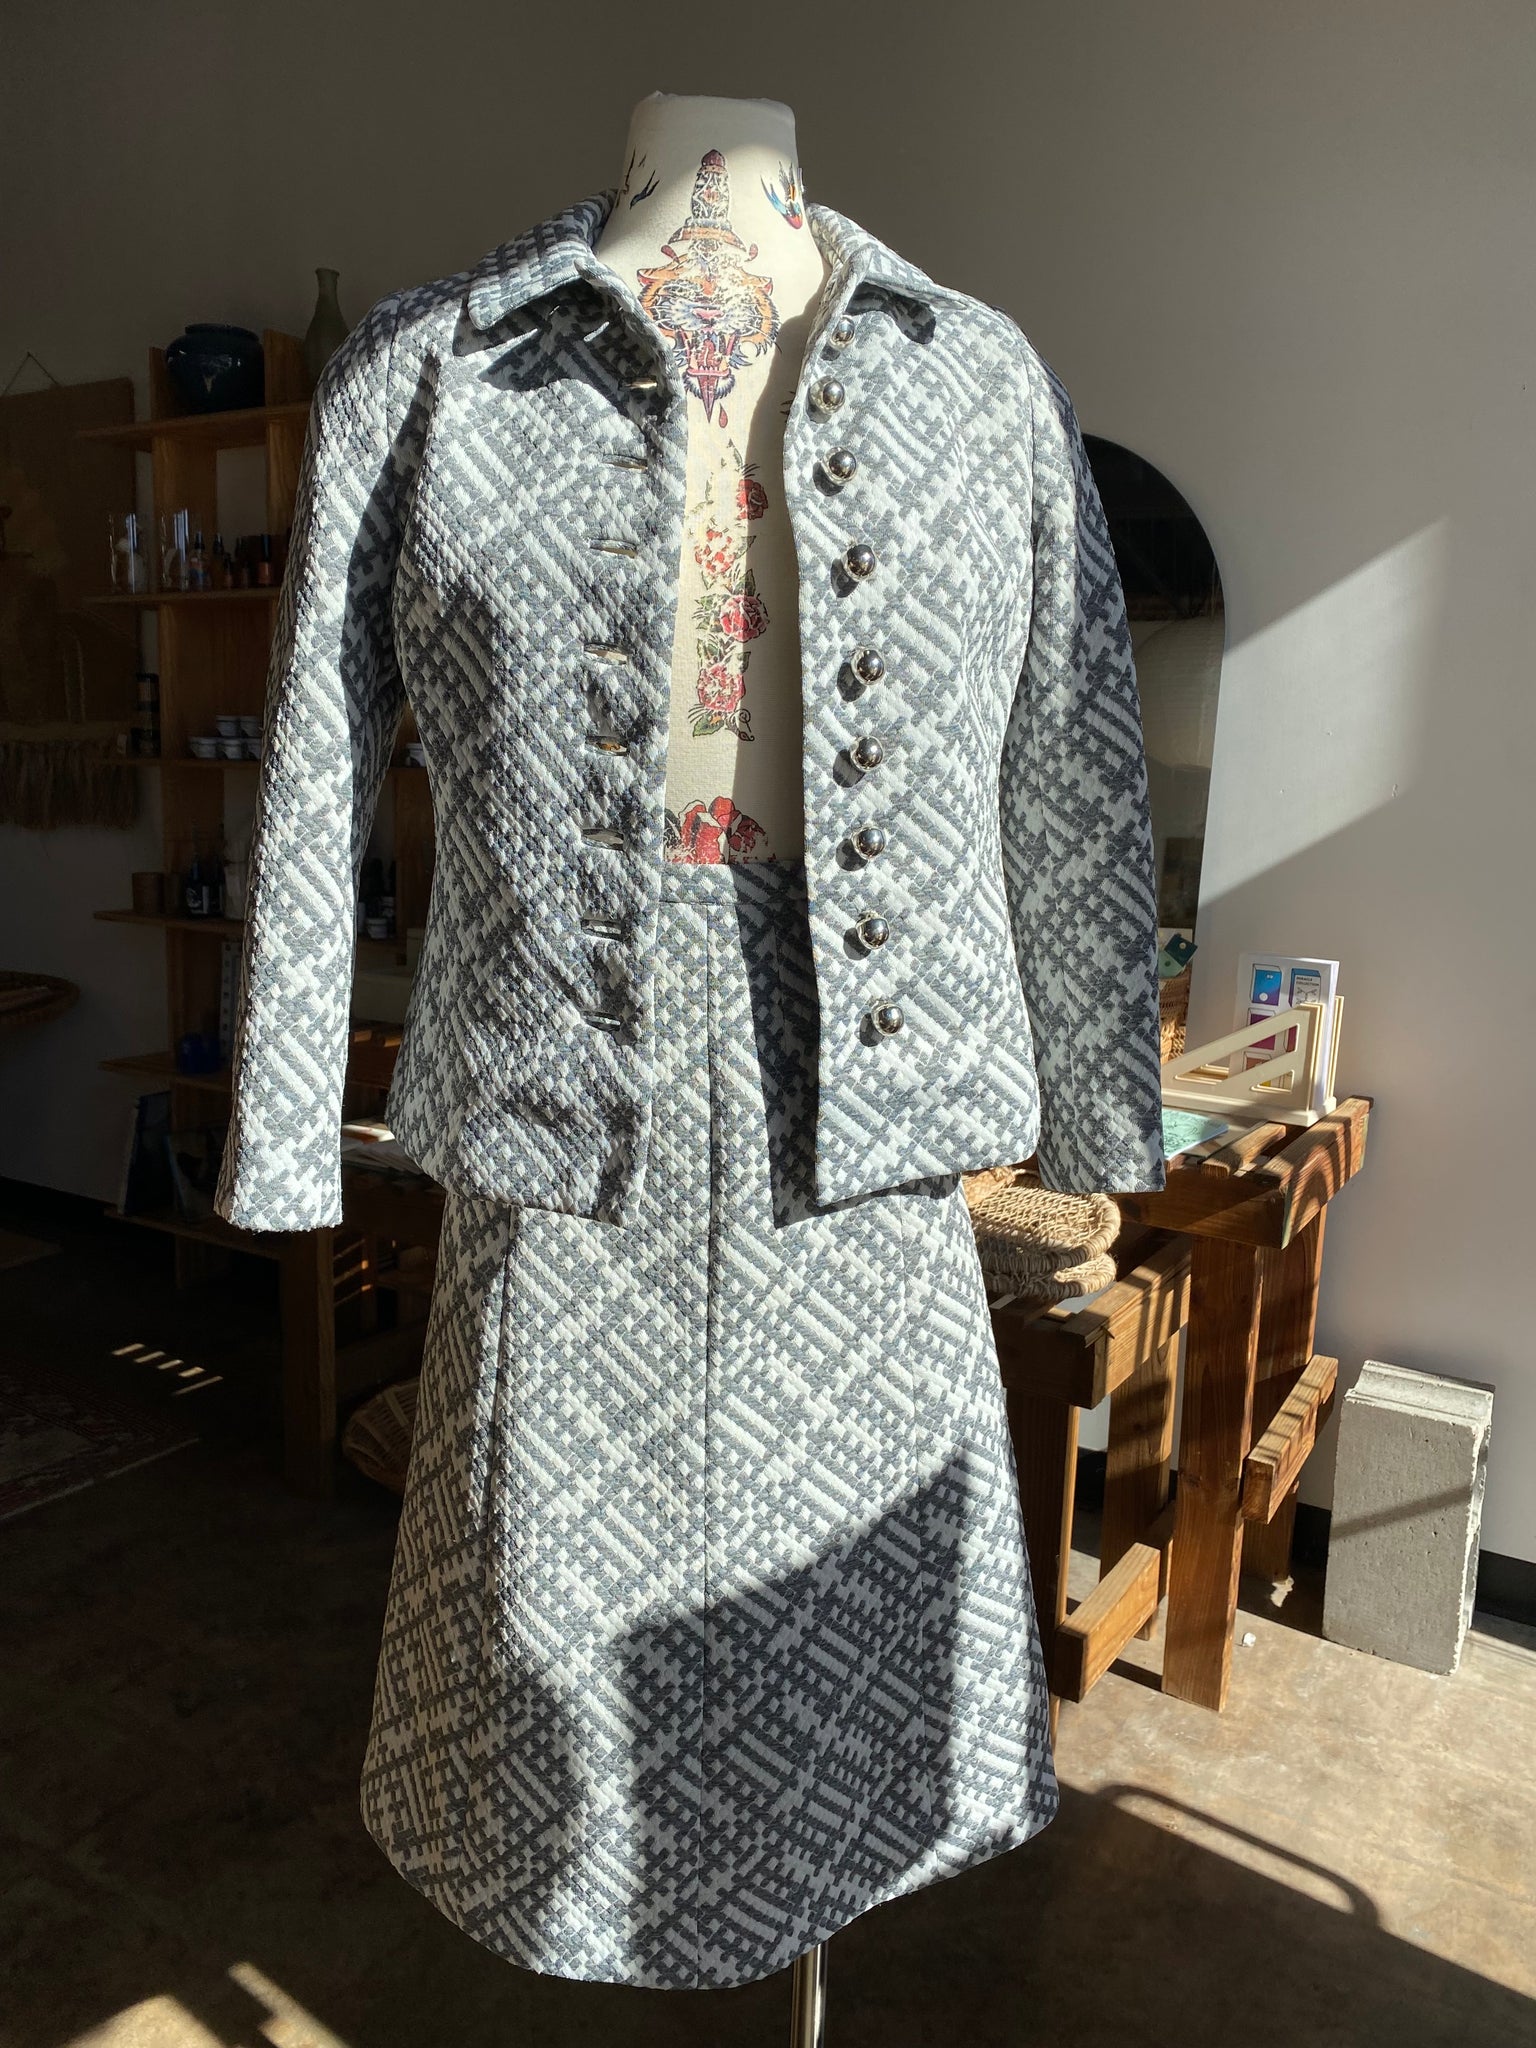 60s Mod "Neiman-Marcus" Jacket and Skirt Set